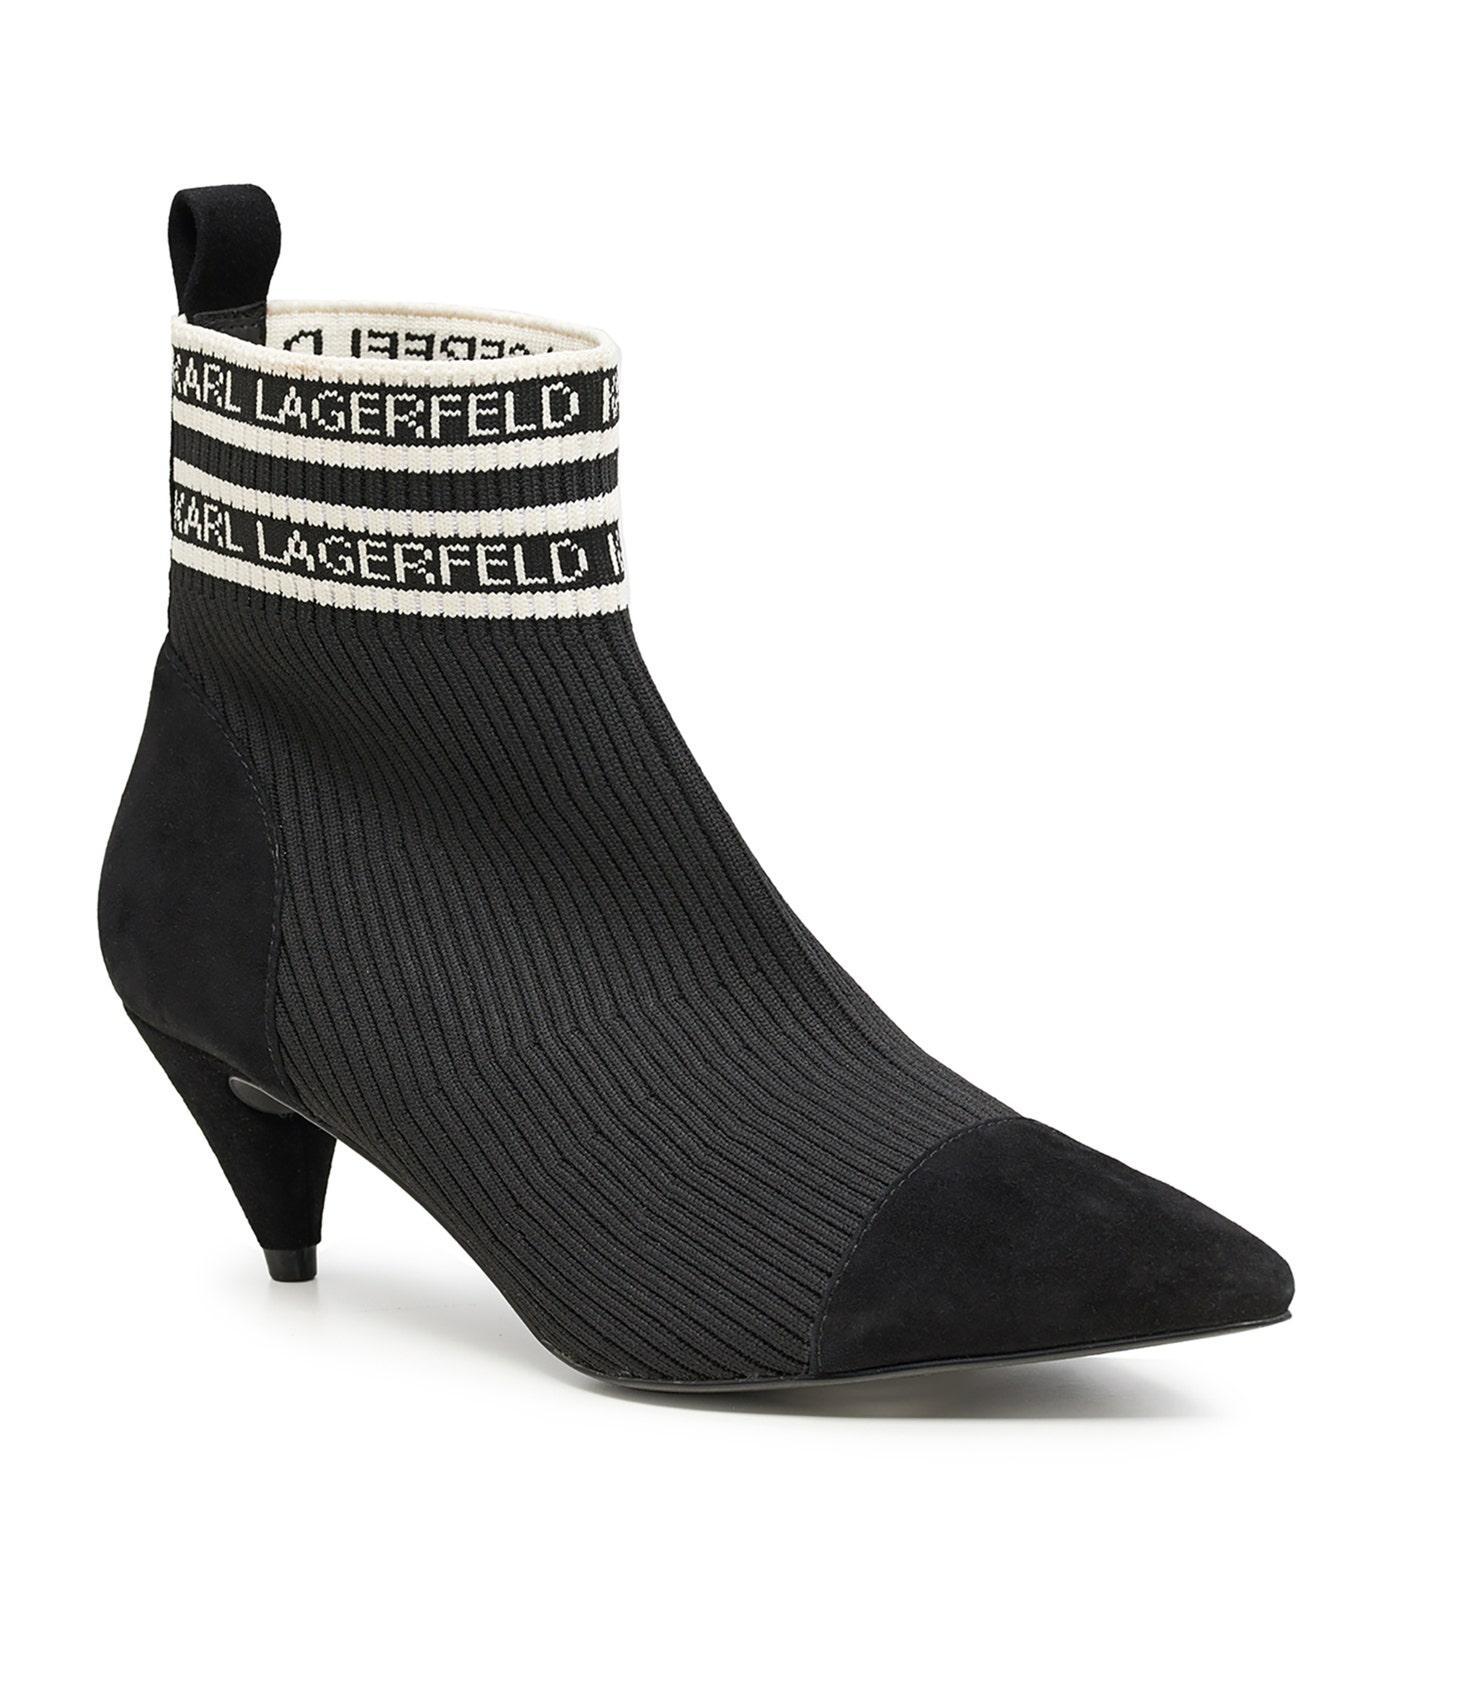 Karl Lagerfeld Paris Payzlee Rhinestone Slide Sandal Product Image